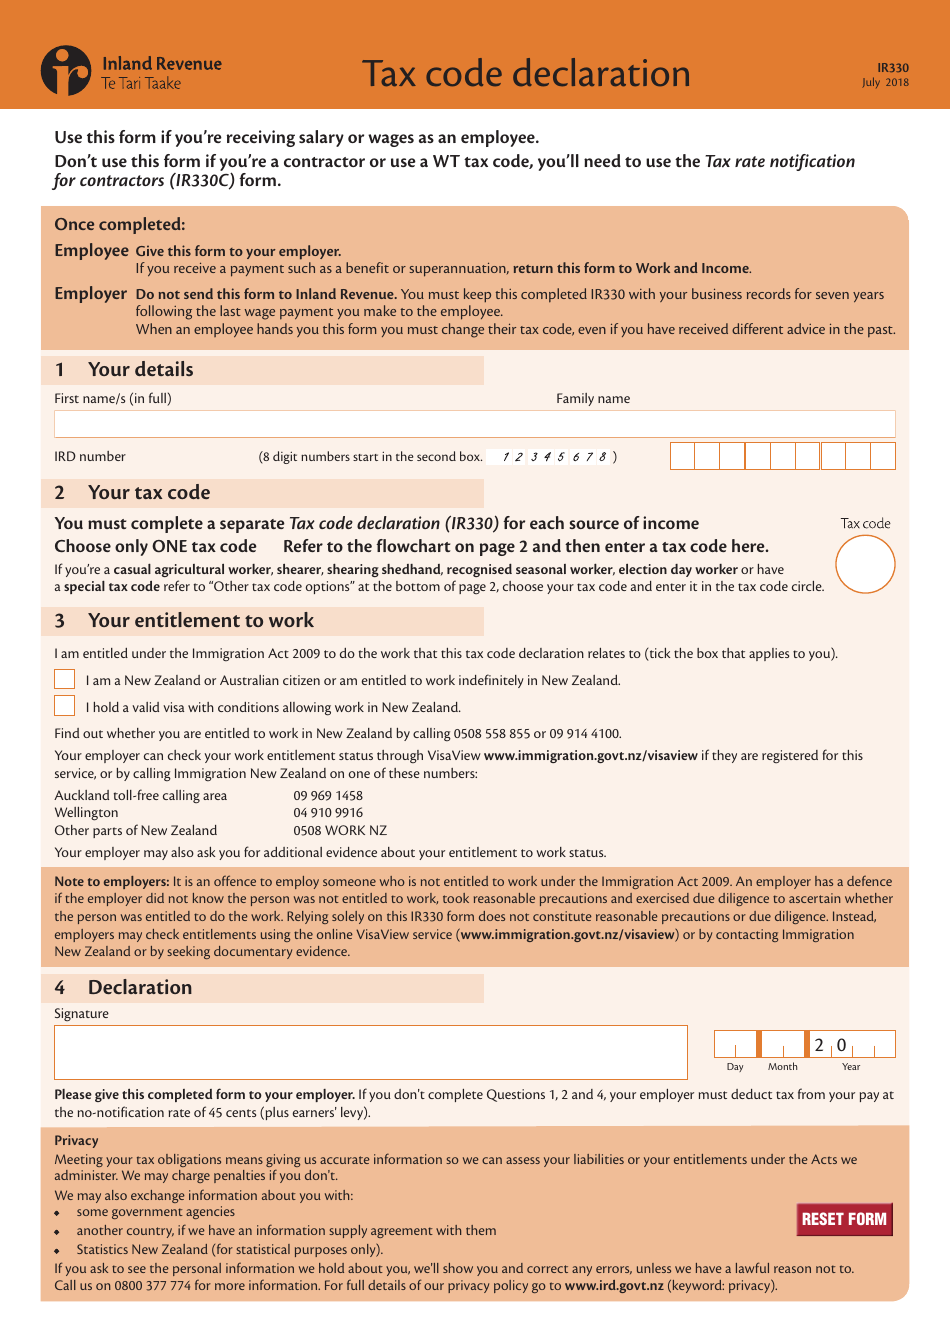 Form IR330 Tax Code Declaration - New Zealand, Page 1